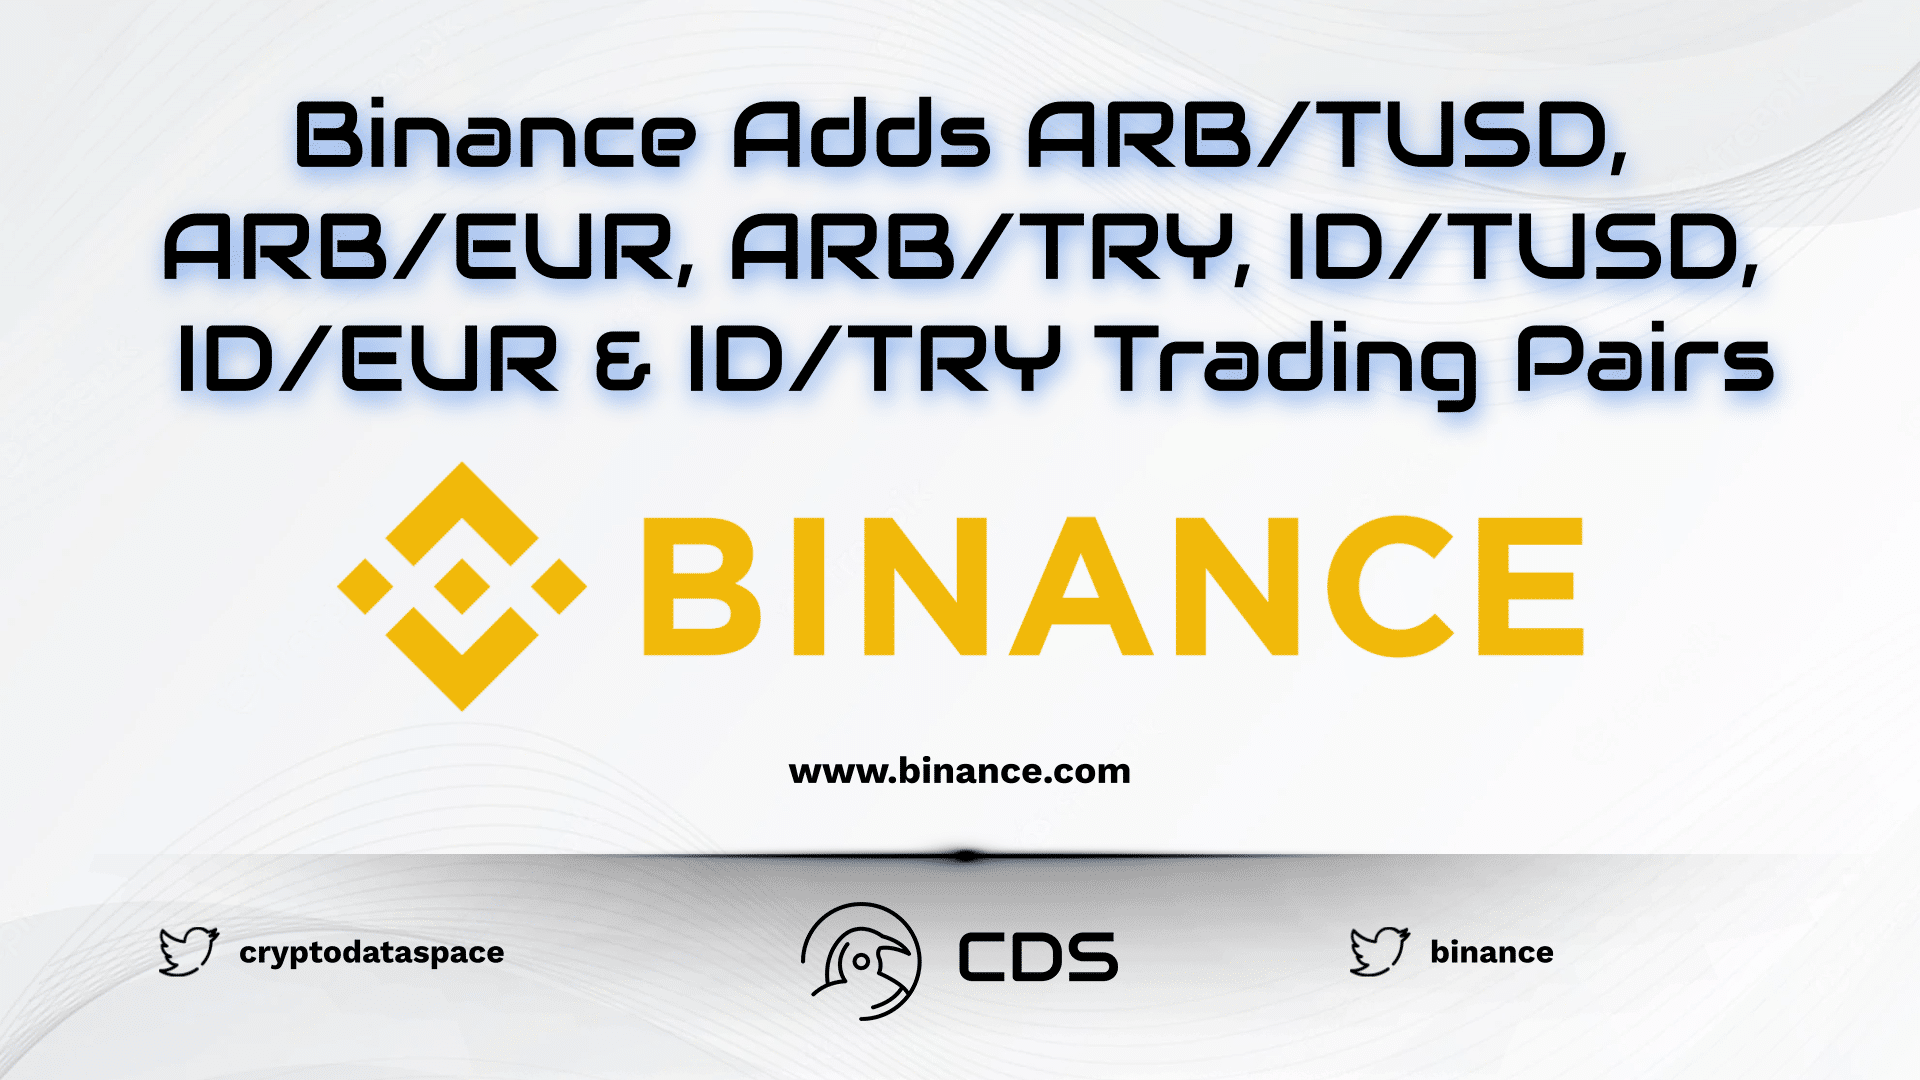 Binance Adds ARB/TUSD, ARB/EUR, ARB/TRY, ID/TUSD, ID/EUR & ID/TRY Trading Pairs